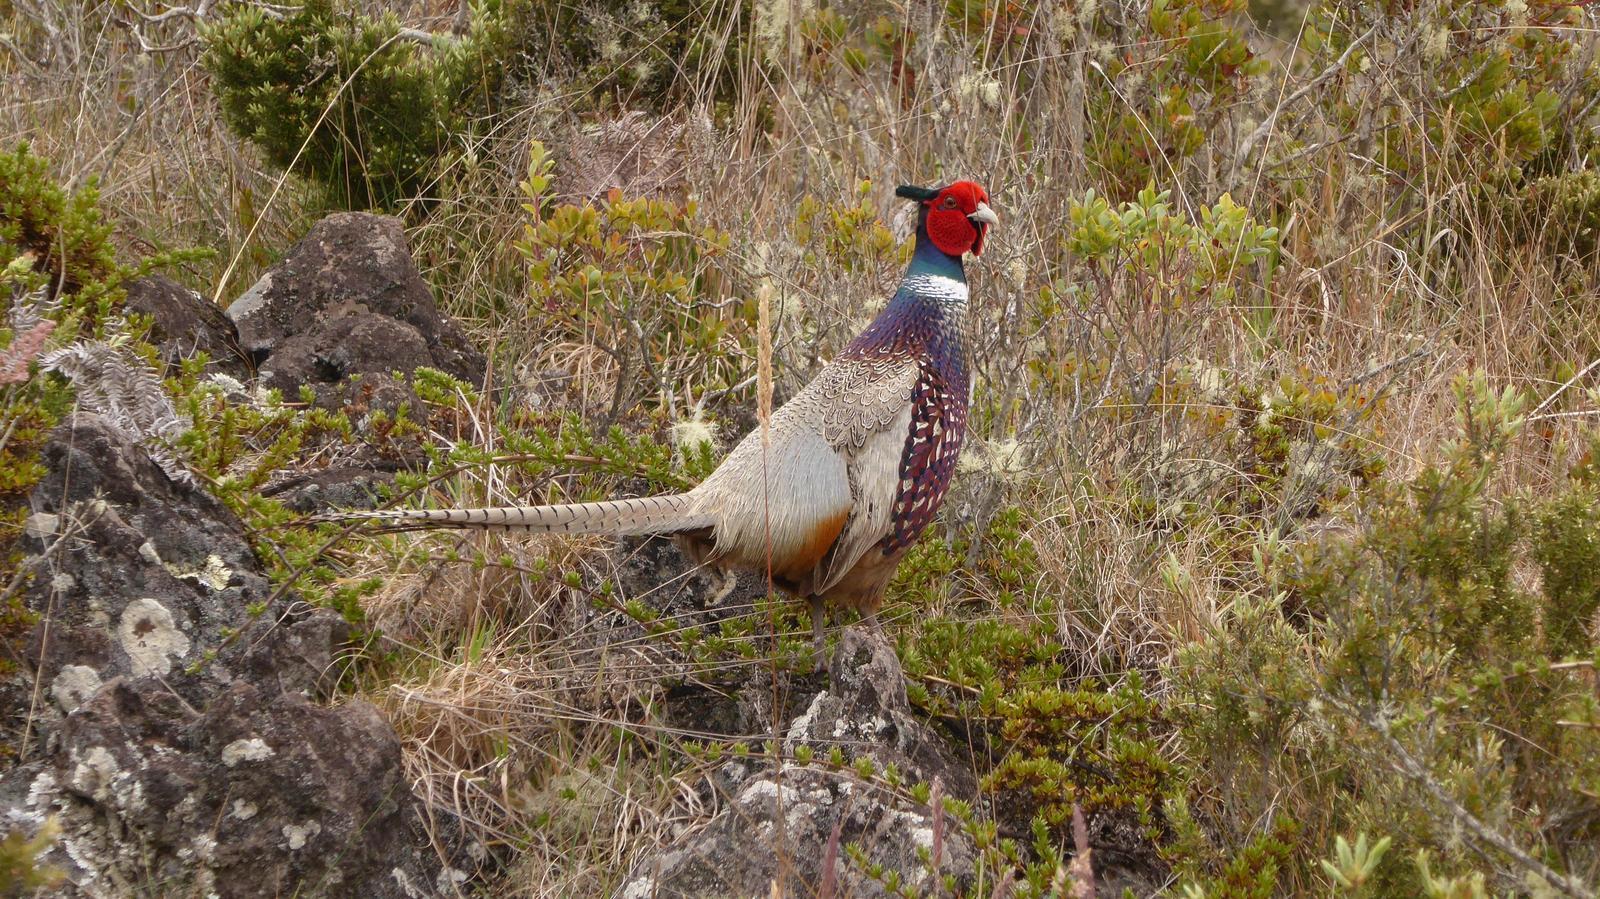 Ring-necked Pheasant (Ring-necked) Photo by Daliel Leite